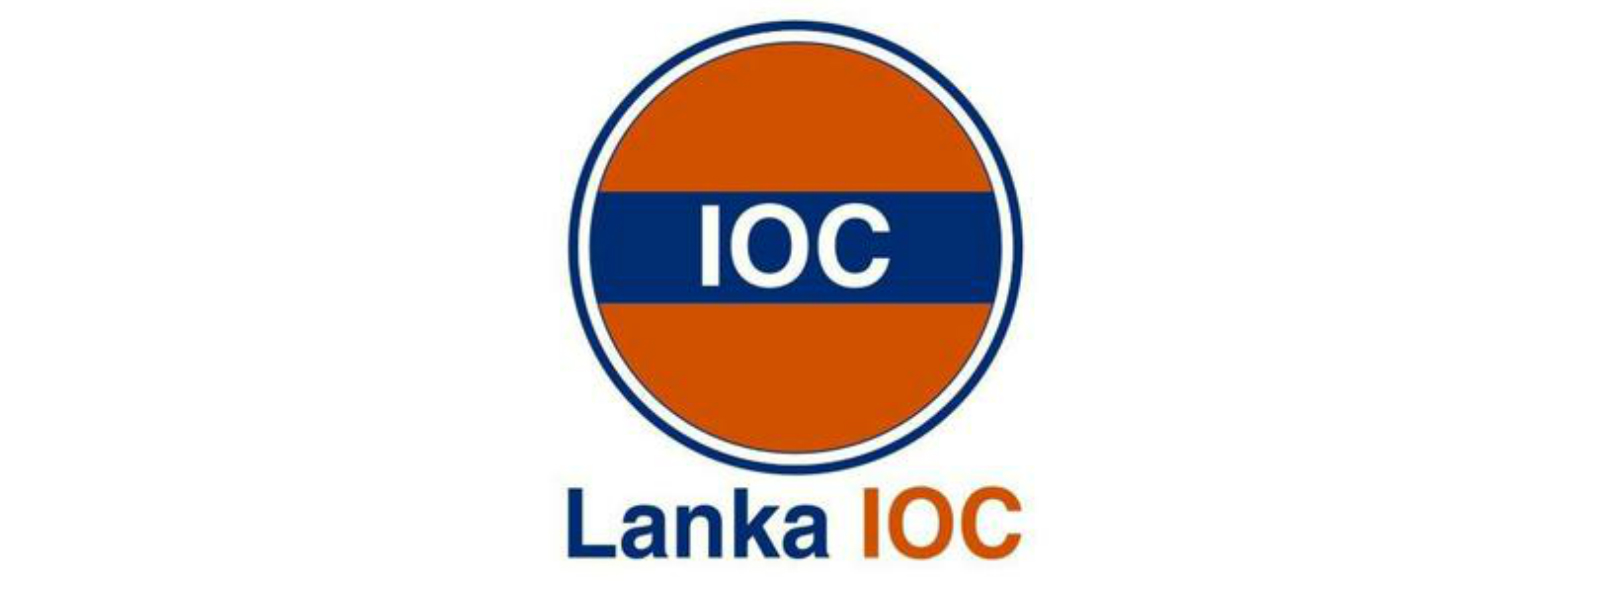 Lanka IOC increases prices to match Ceypetco